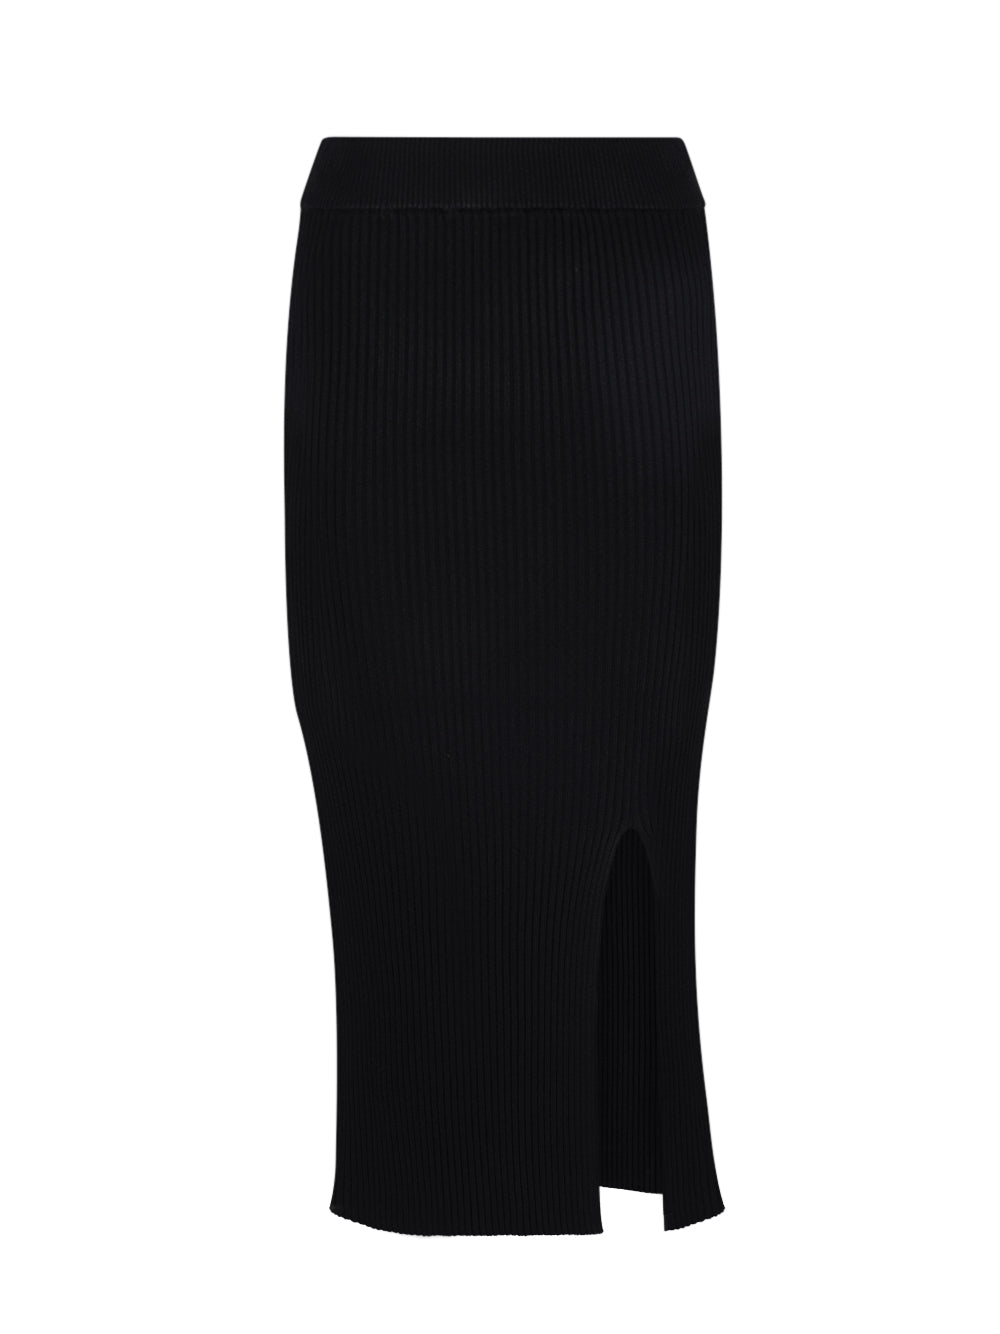 Knit Midi Skirt (Black)